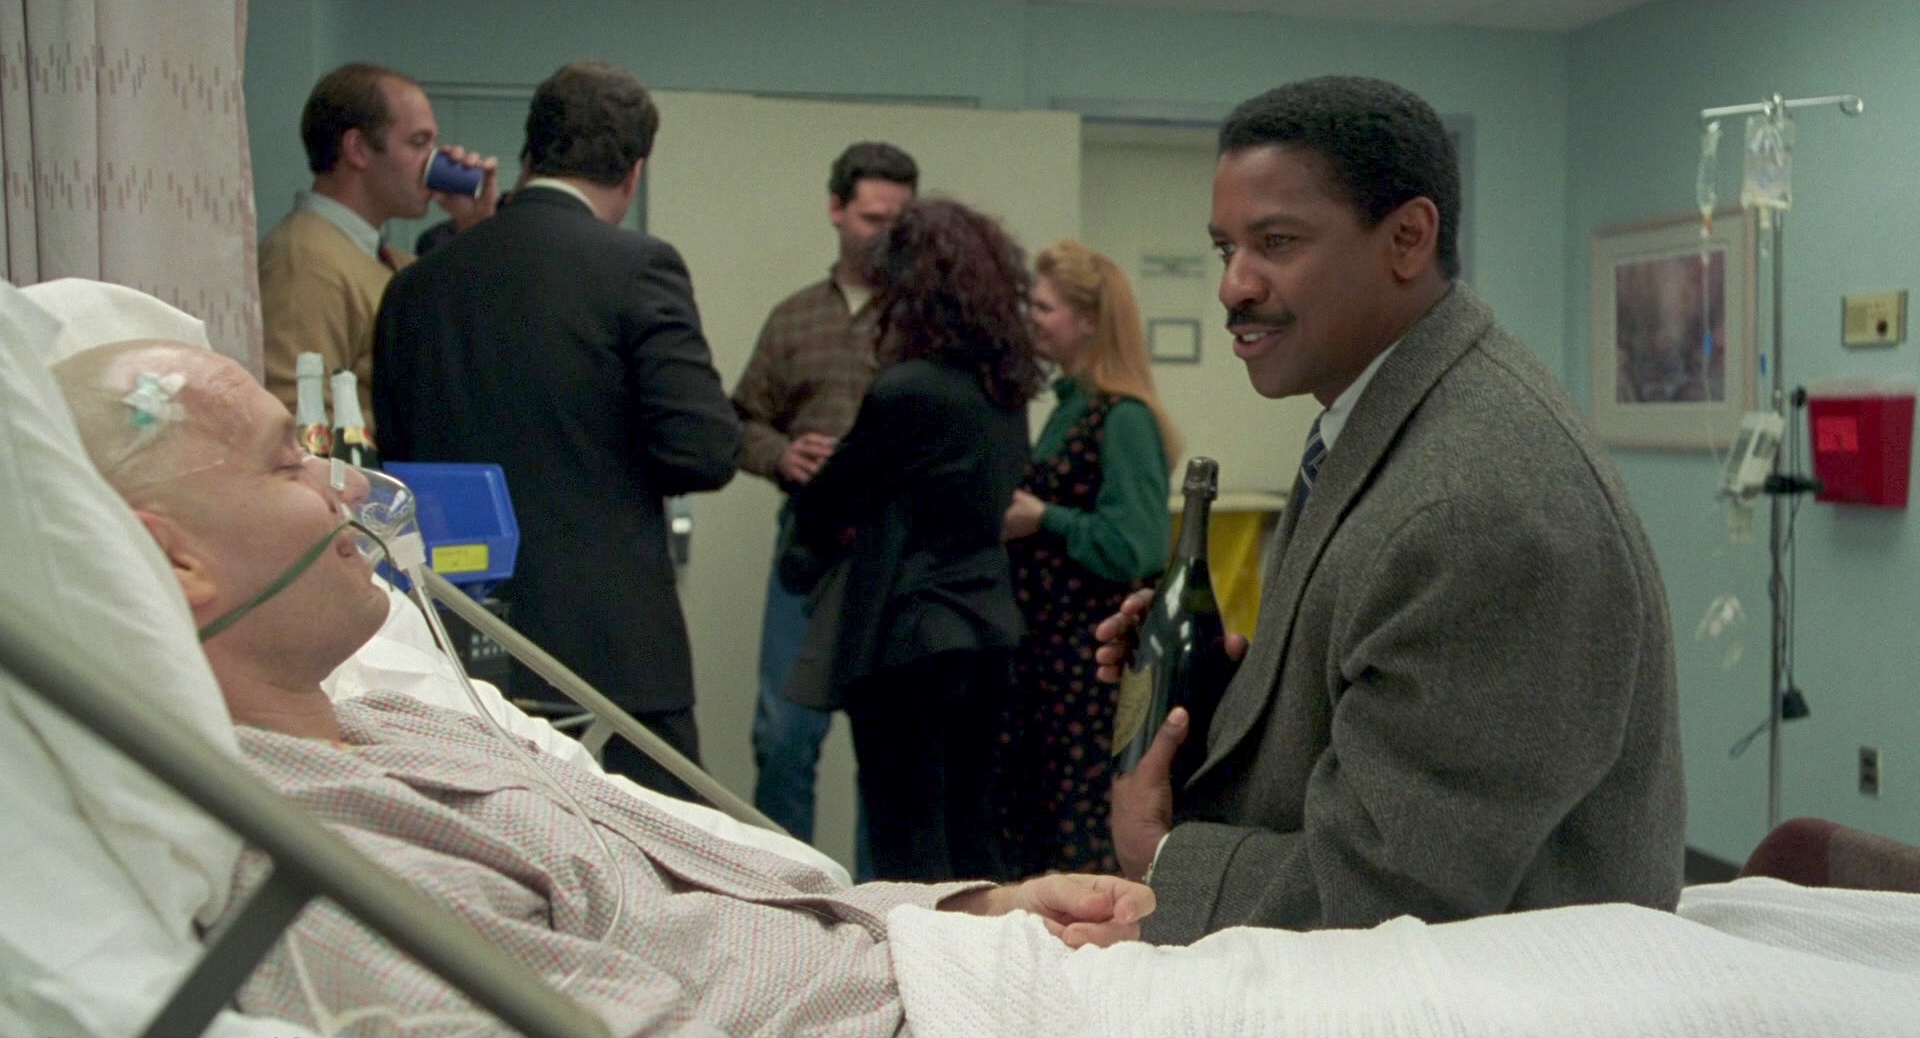 Miller Visits Beckett at the Hospital